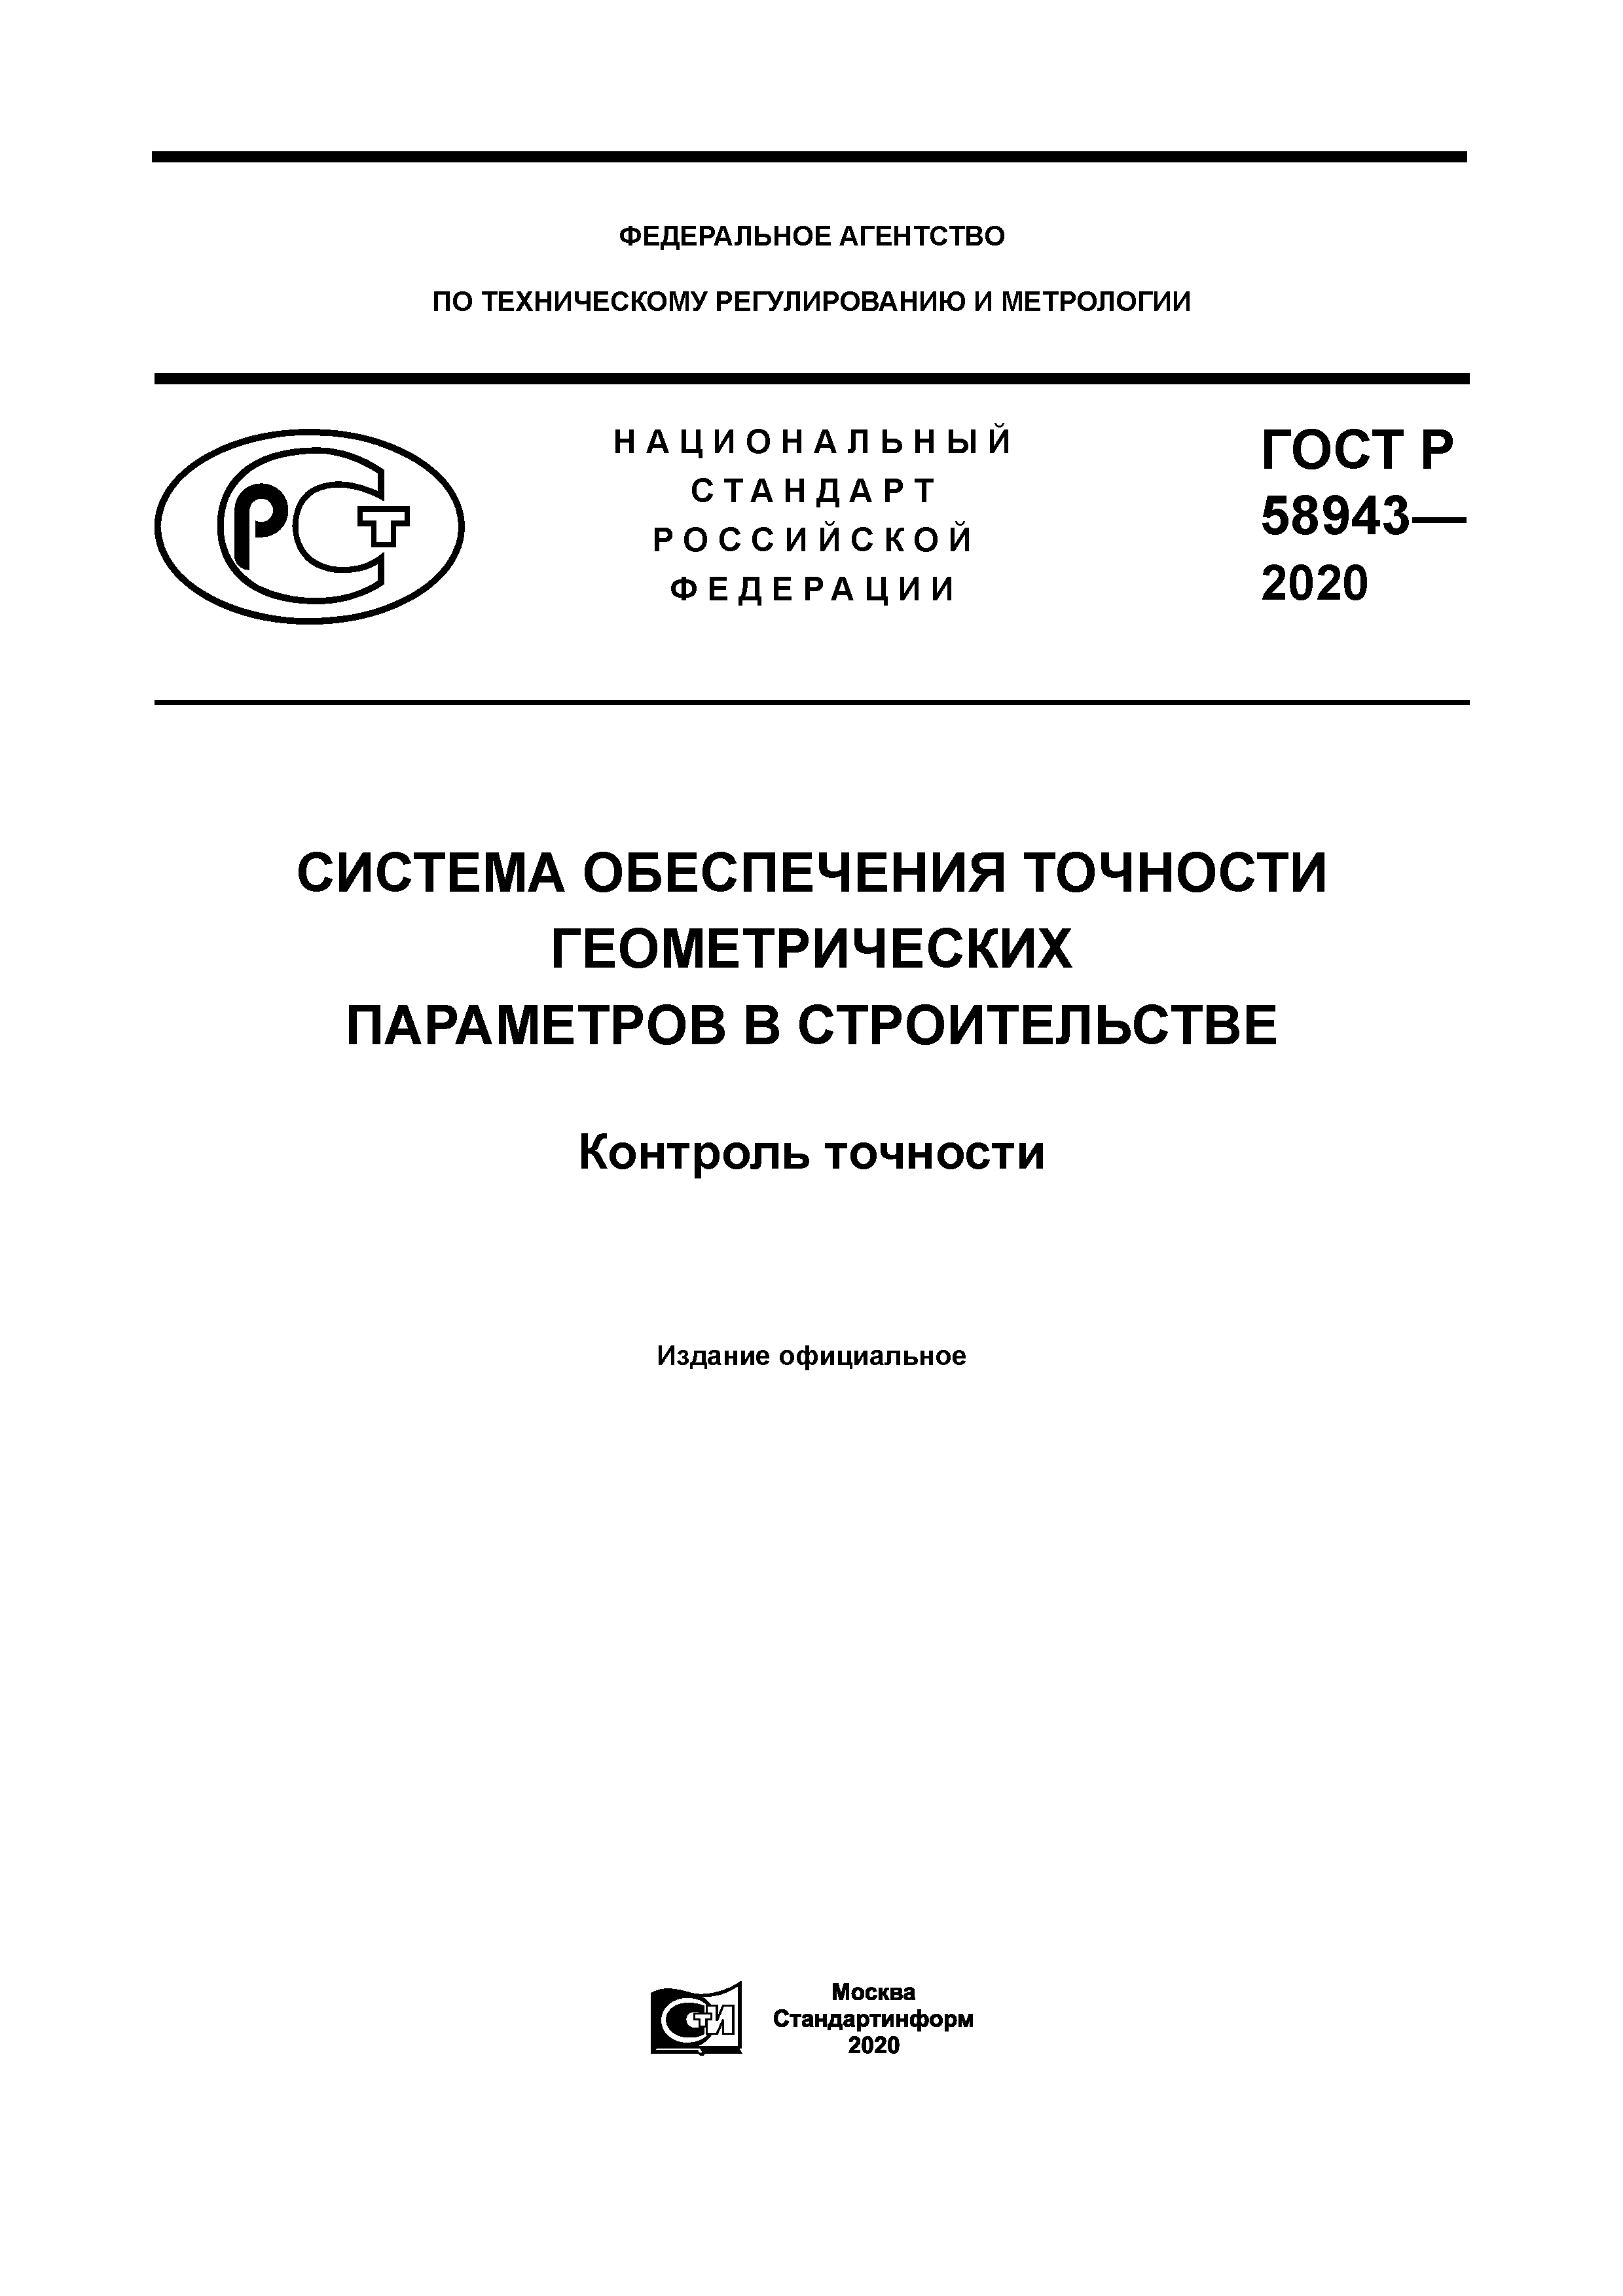 ГОСТ Р 58943-2020